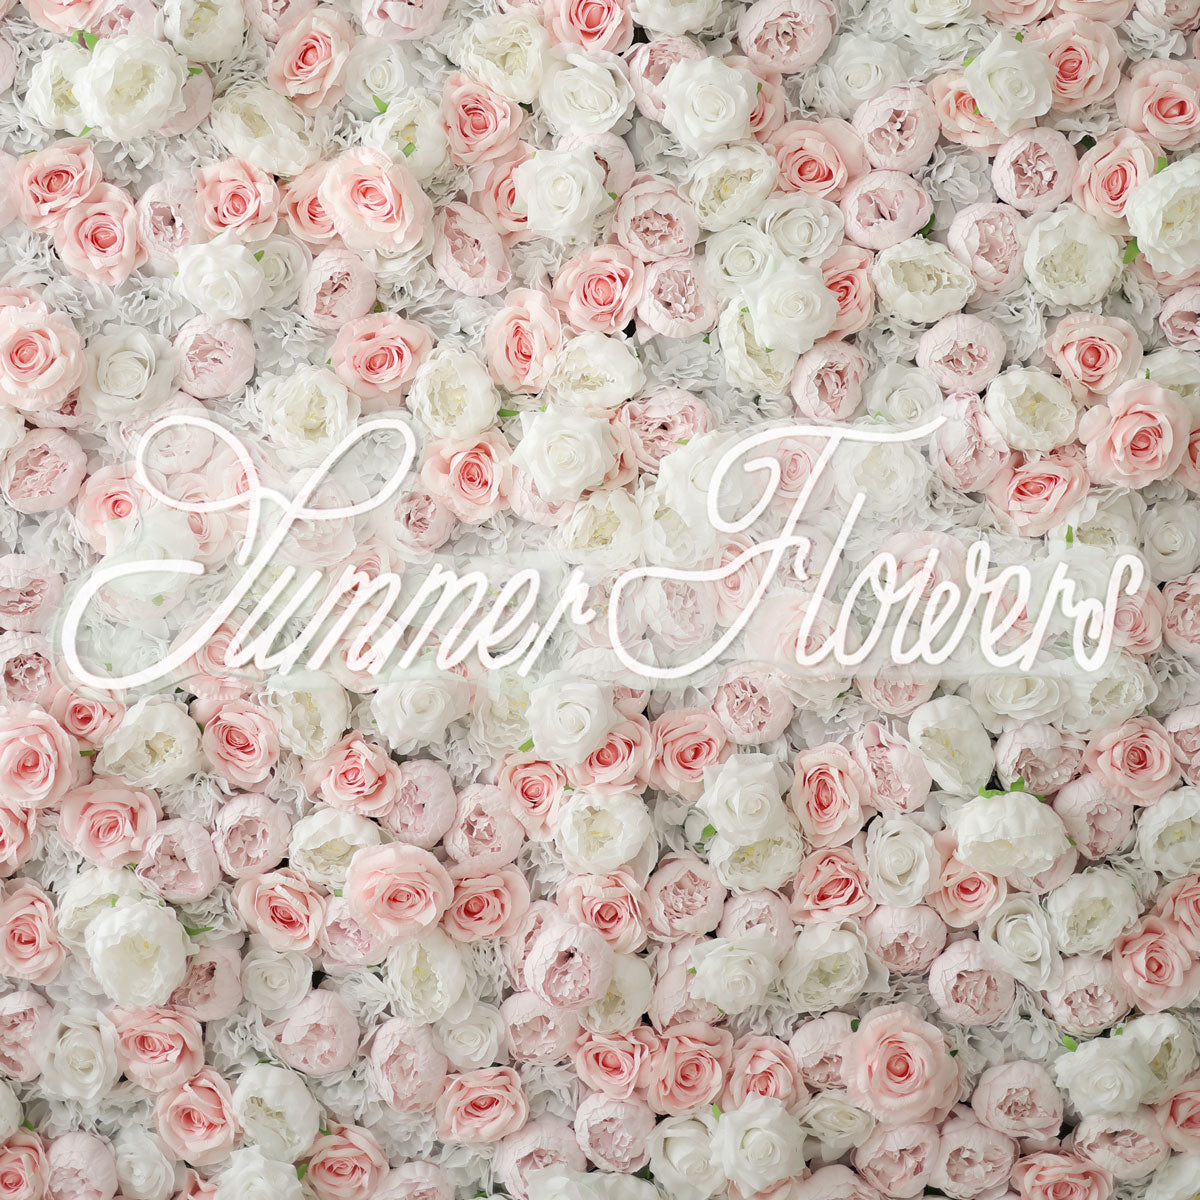 Summer Flower:CB-186 8ft*8ft Cloth Back Artificial Flower Wall Backdrop